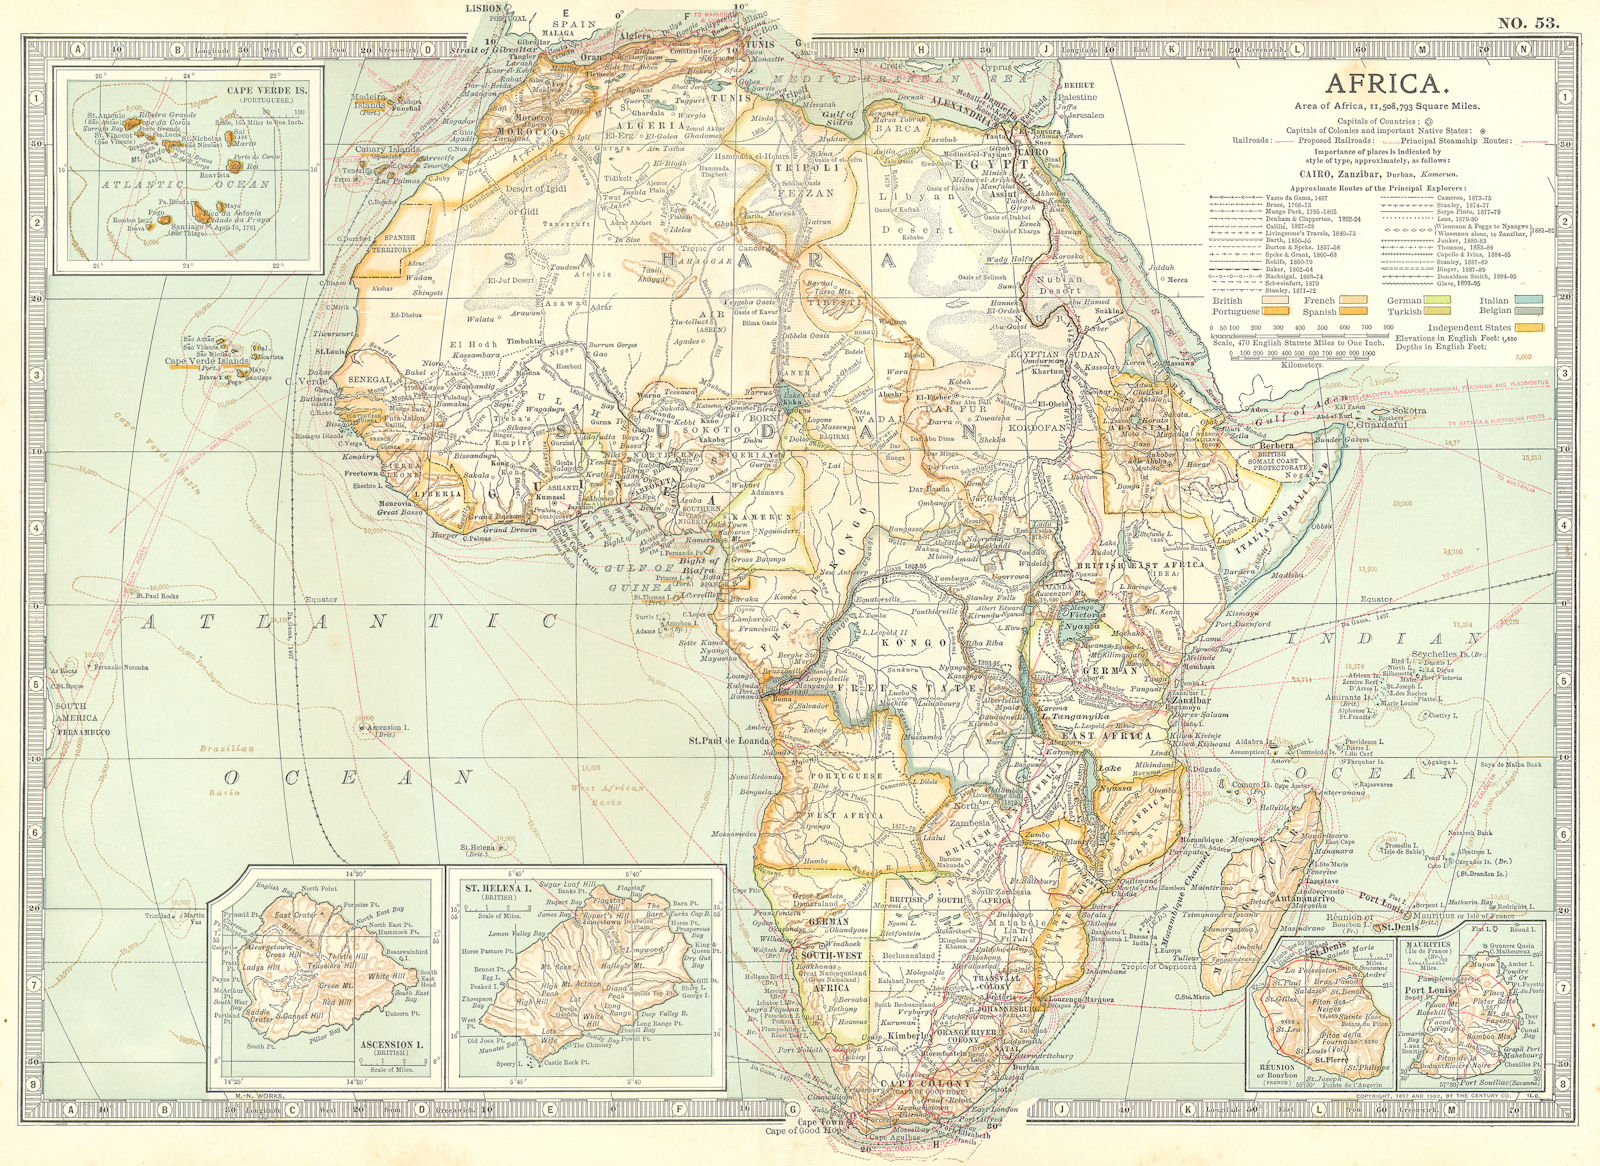 AFRICA. Cape Verde, Mauritius, Reunion, Ascension, St Helena islands 1903 map